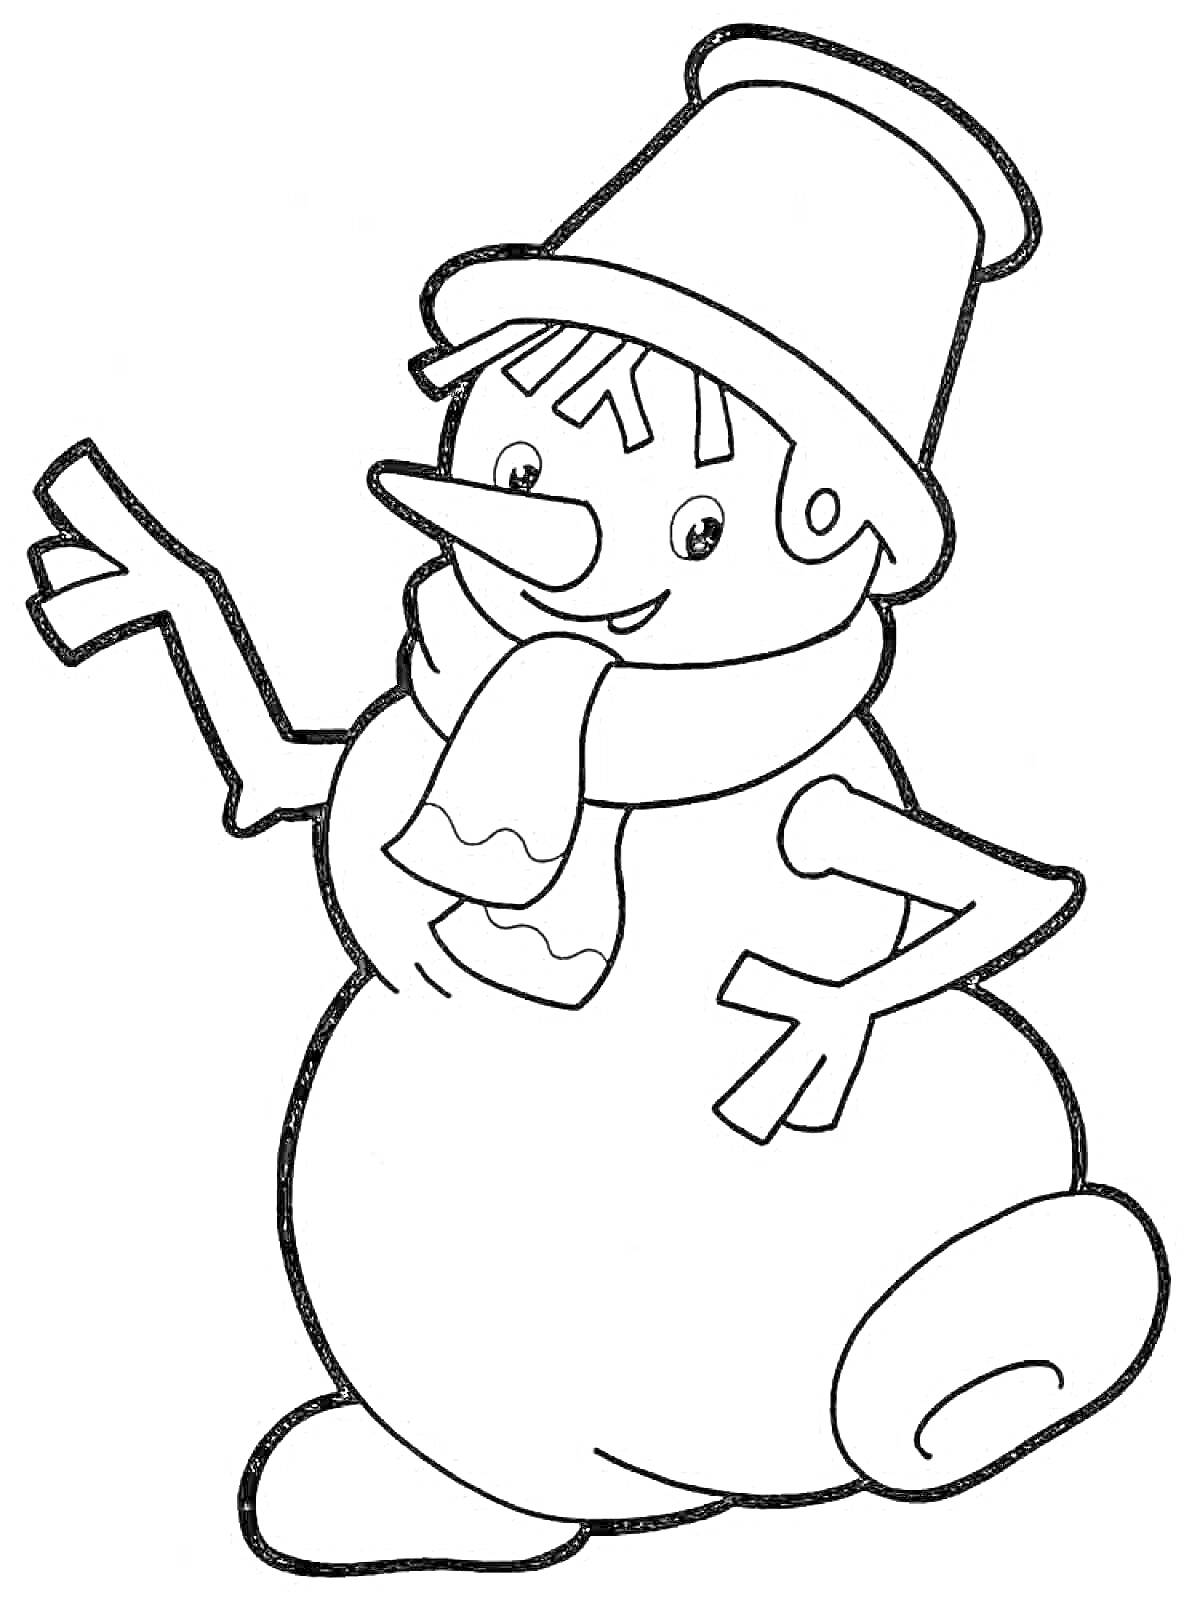 Снеговик с ведром на голове, шарфом и морковным носом